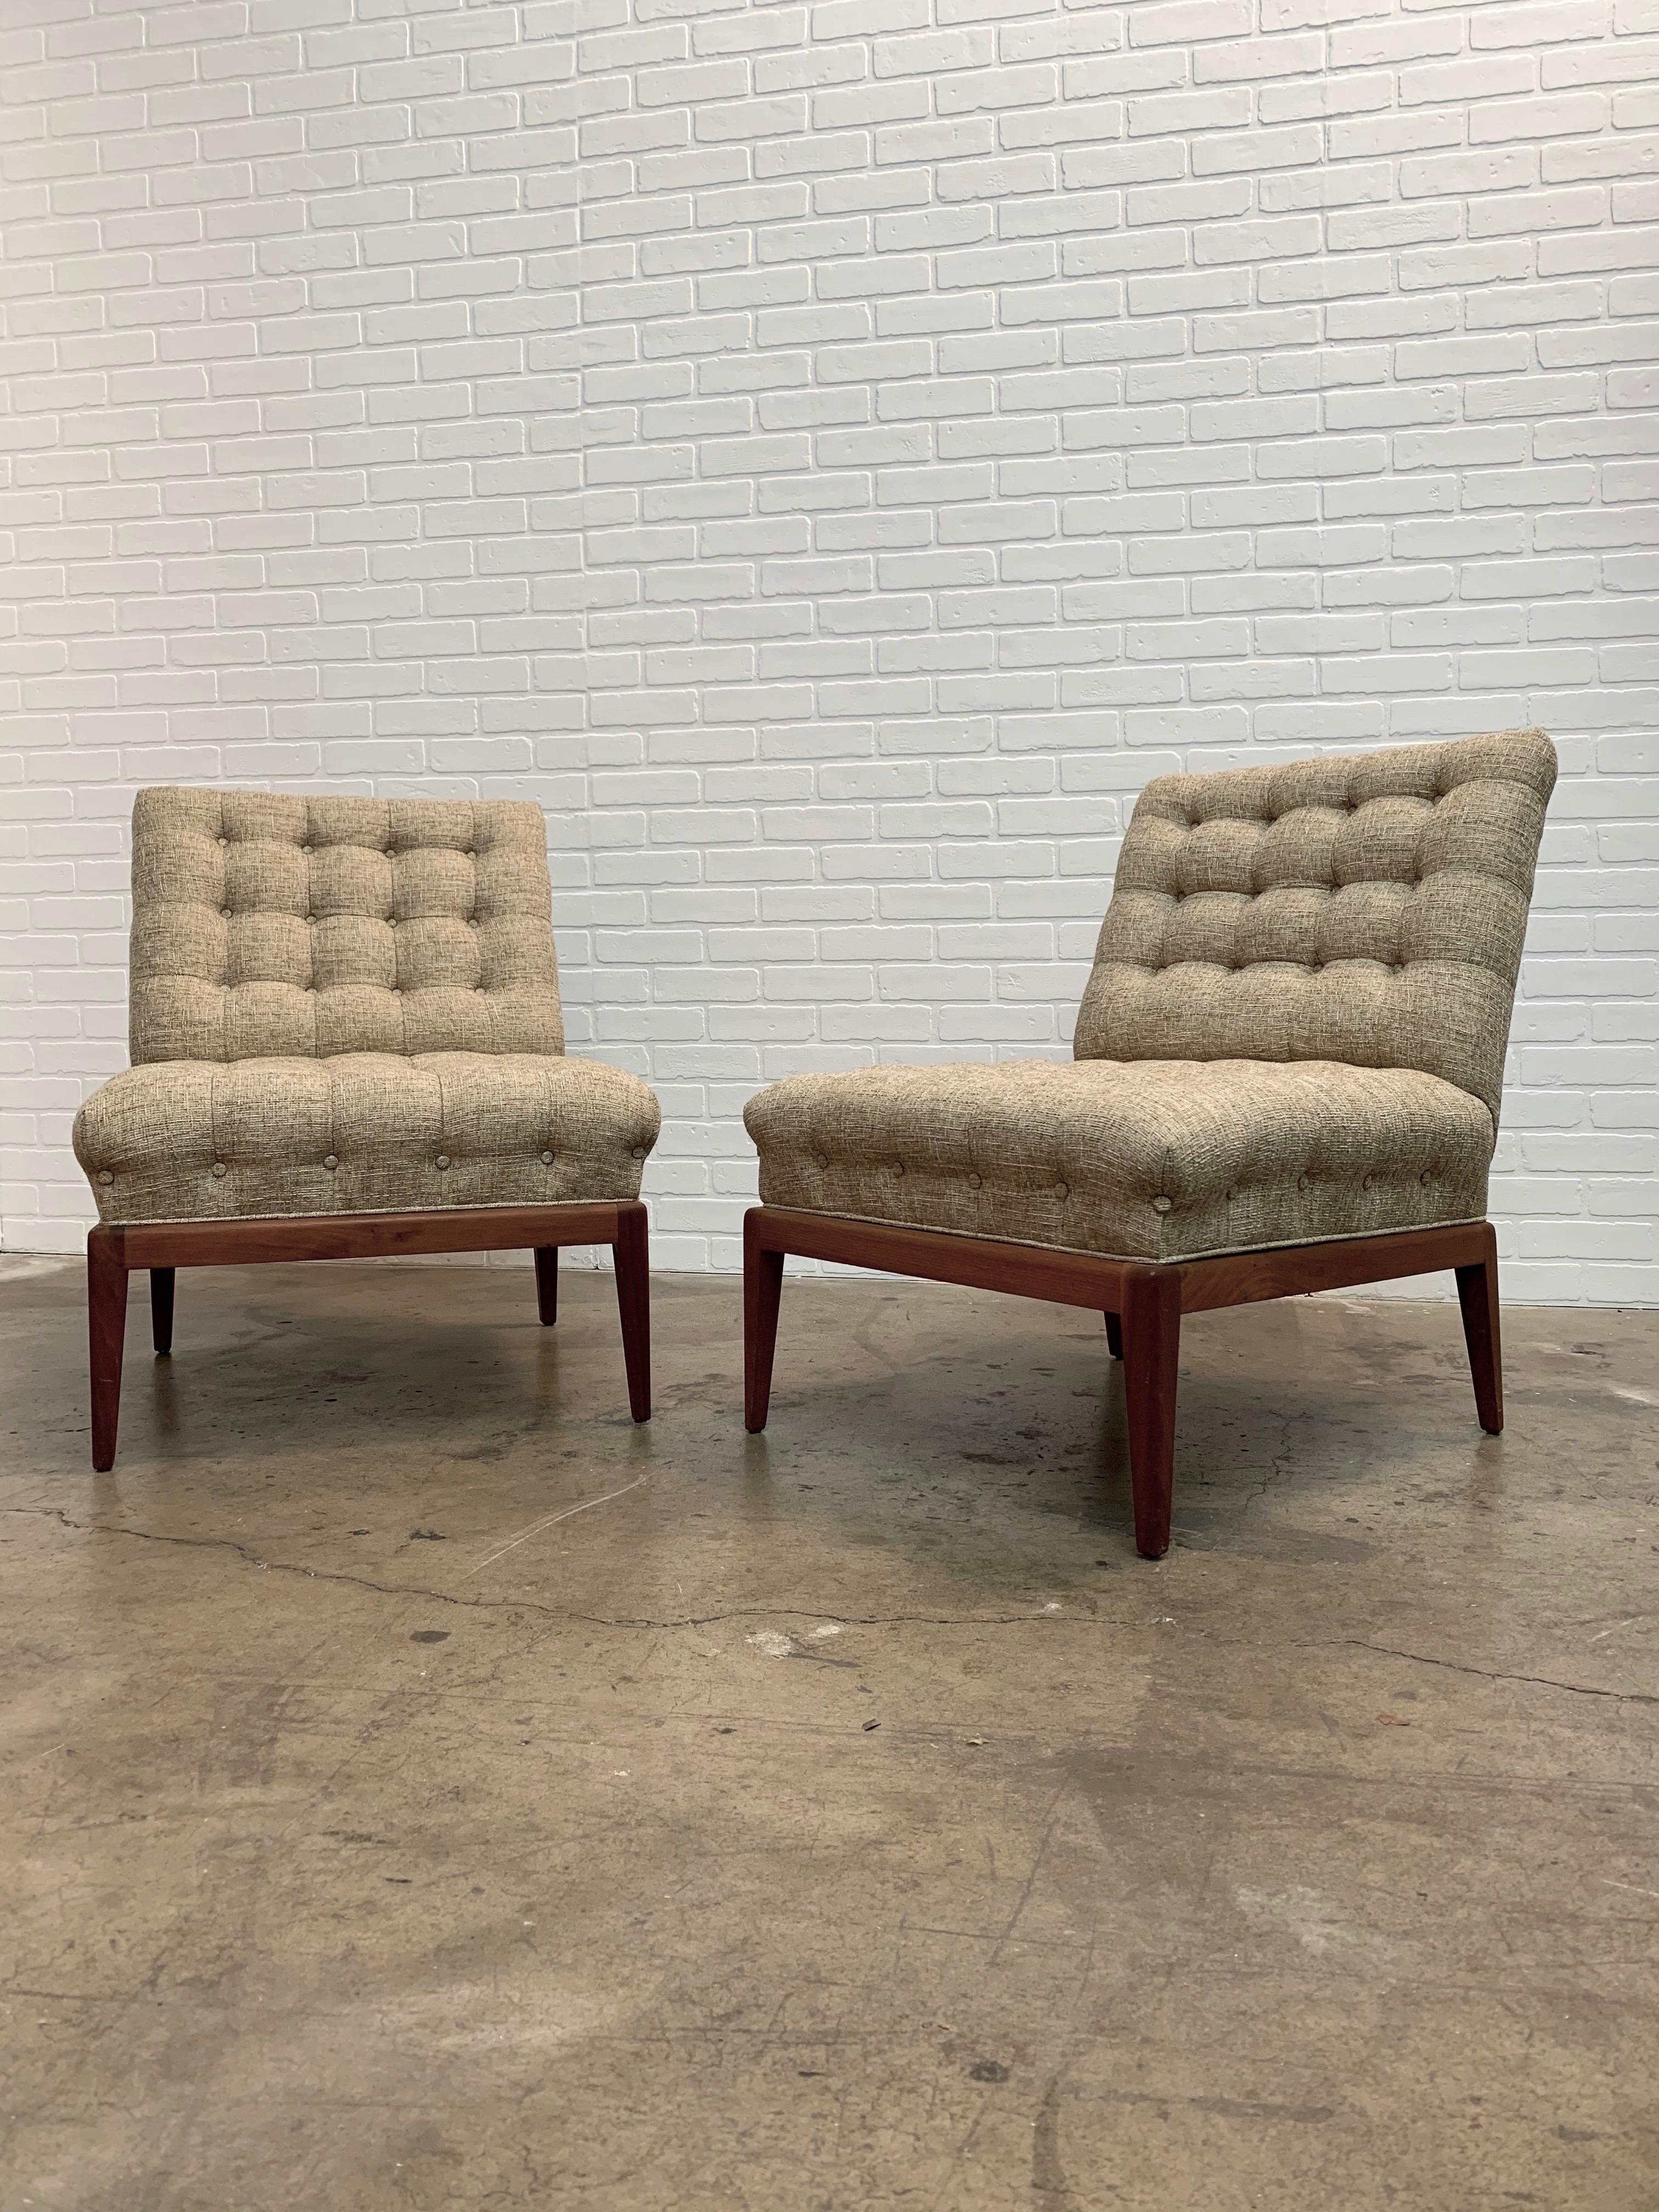 Mid-20th Century Pair of Tufted Slipper Chairs by Kipp Stewart